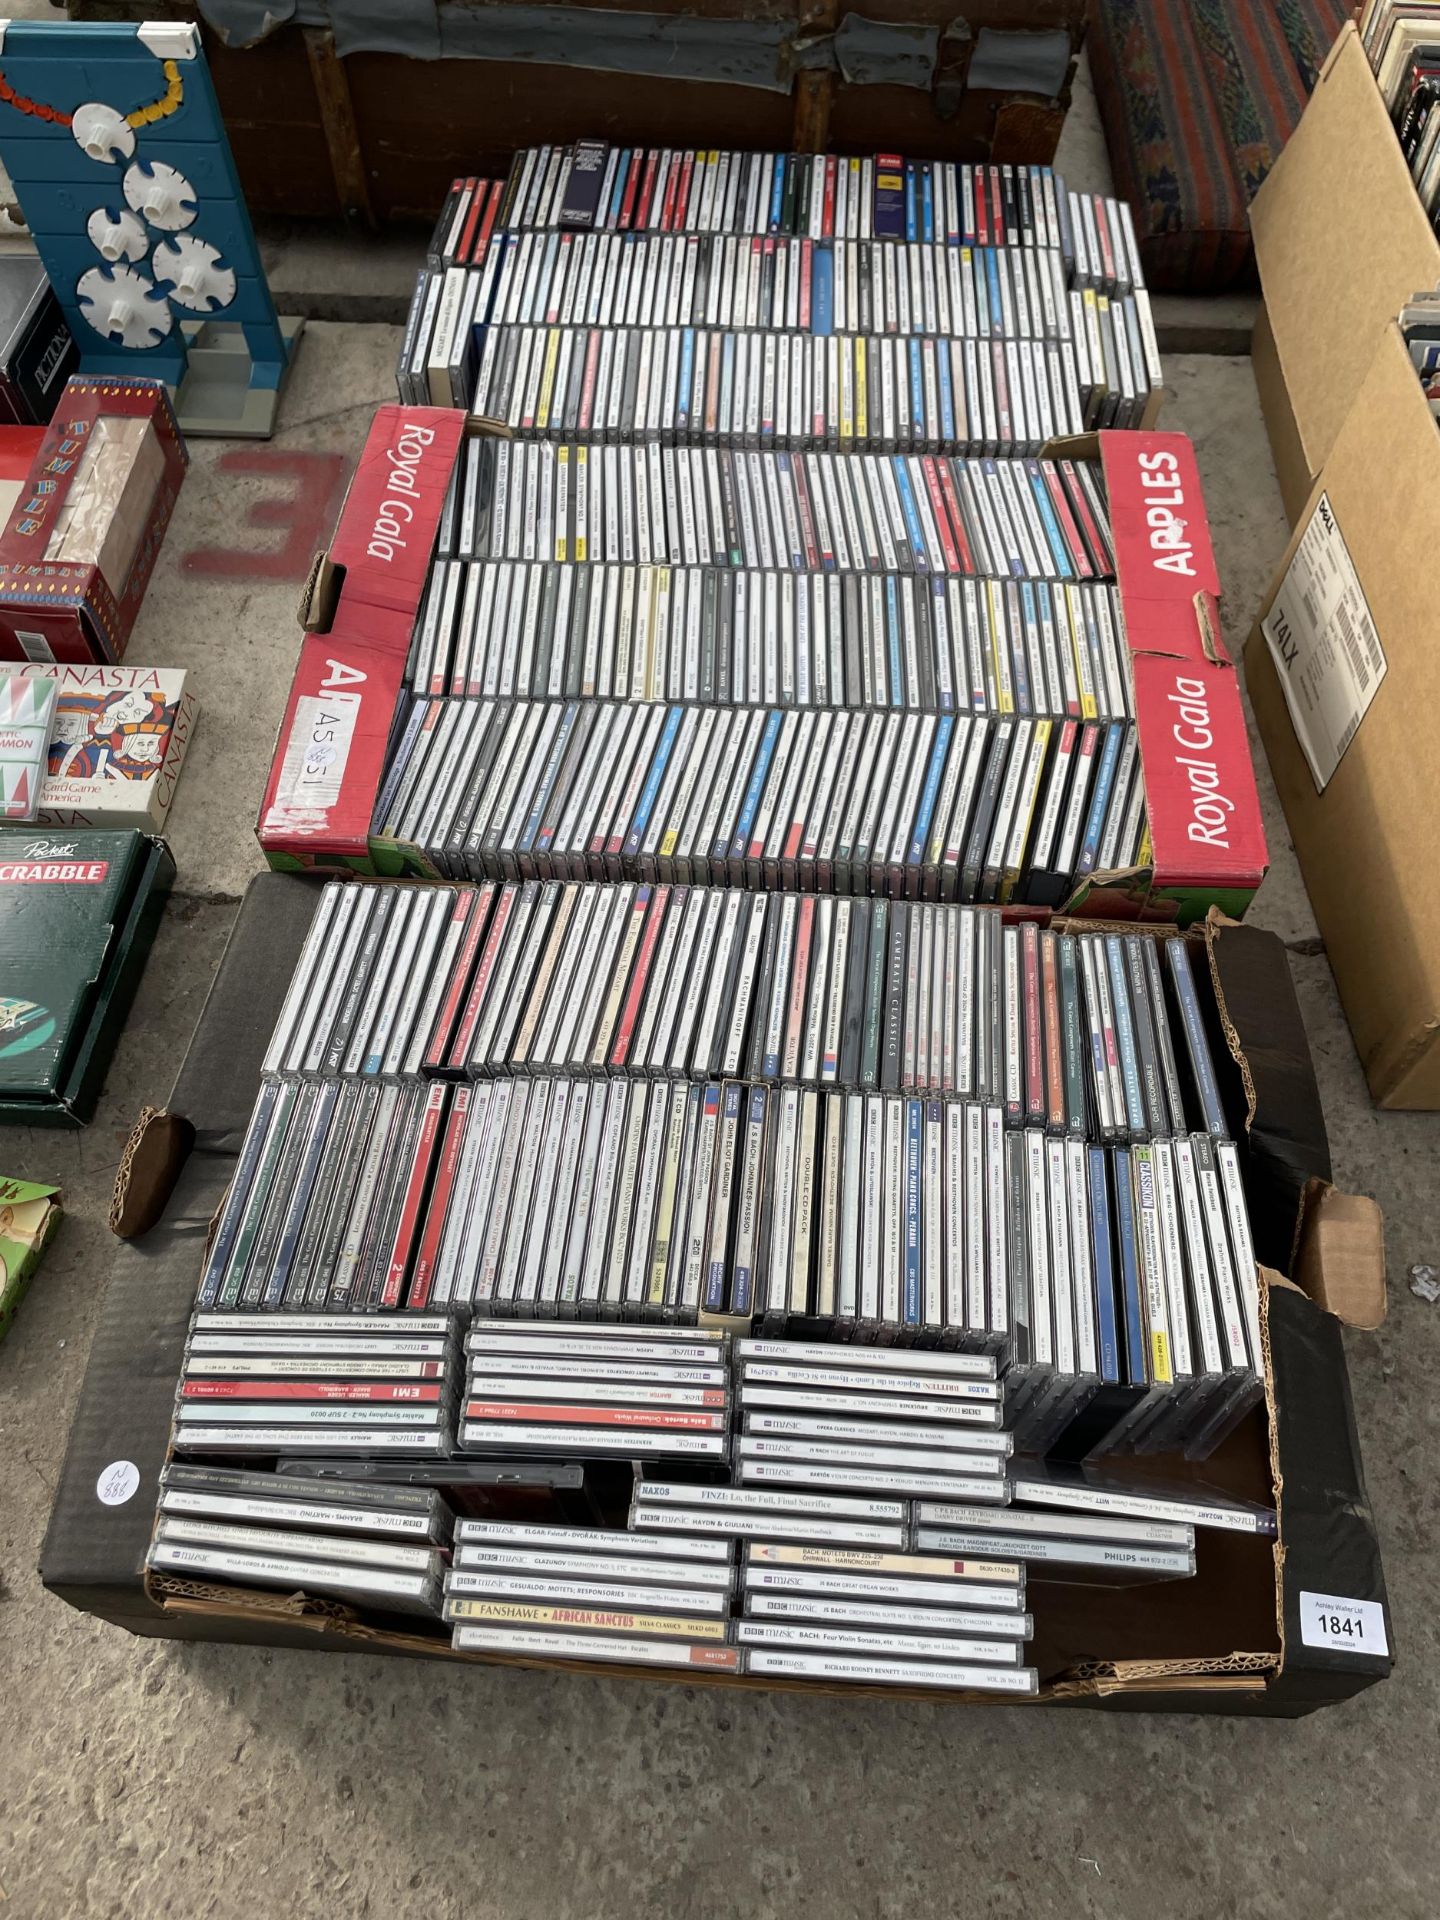 A LARGE ASSORTMENT OF VARIOUS CDS